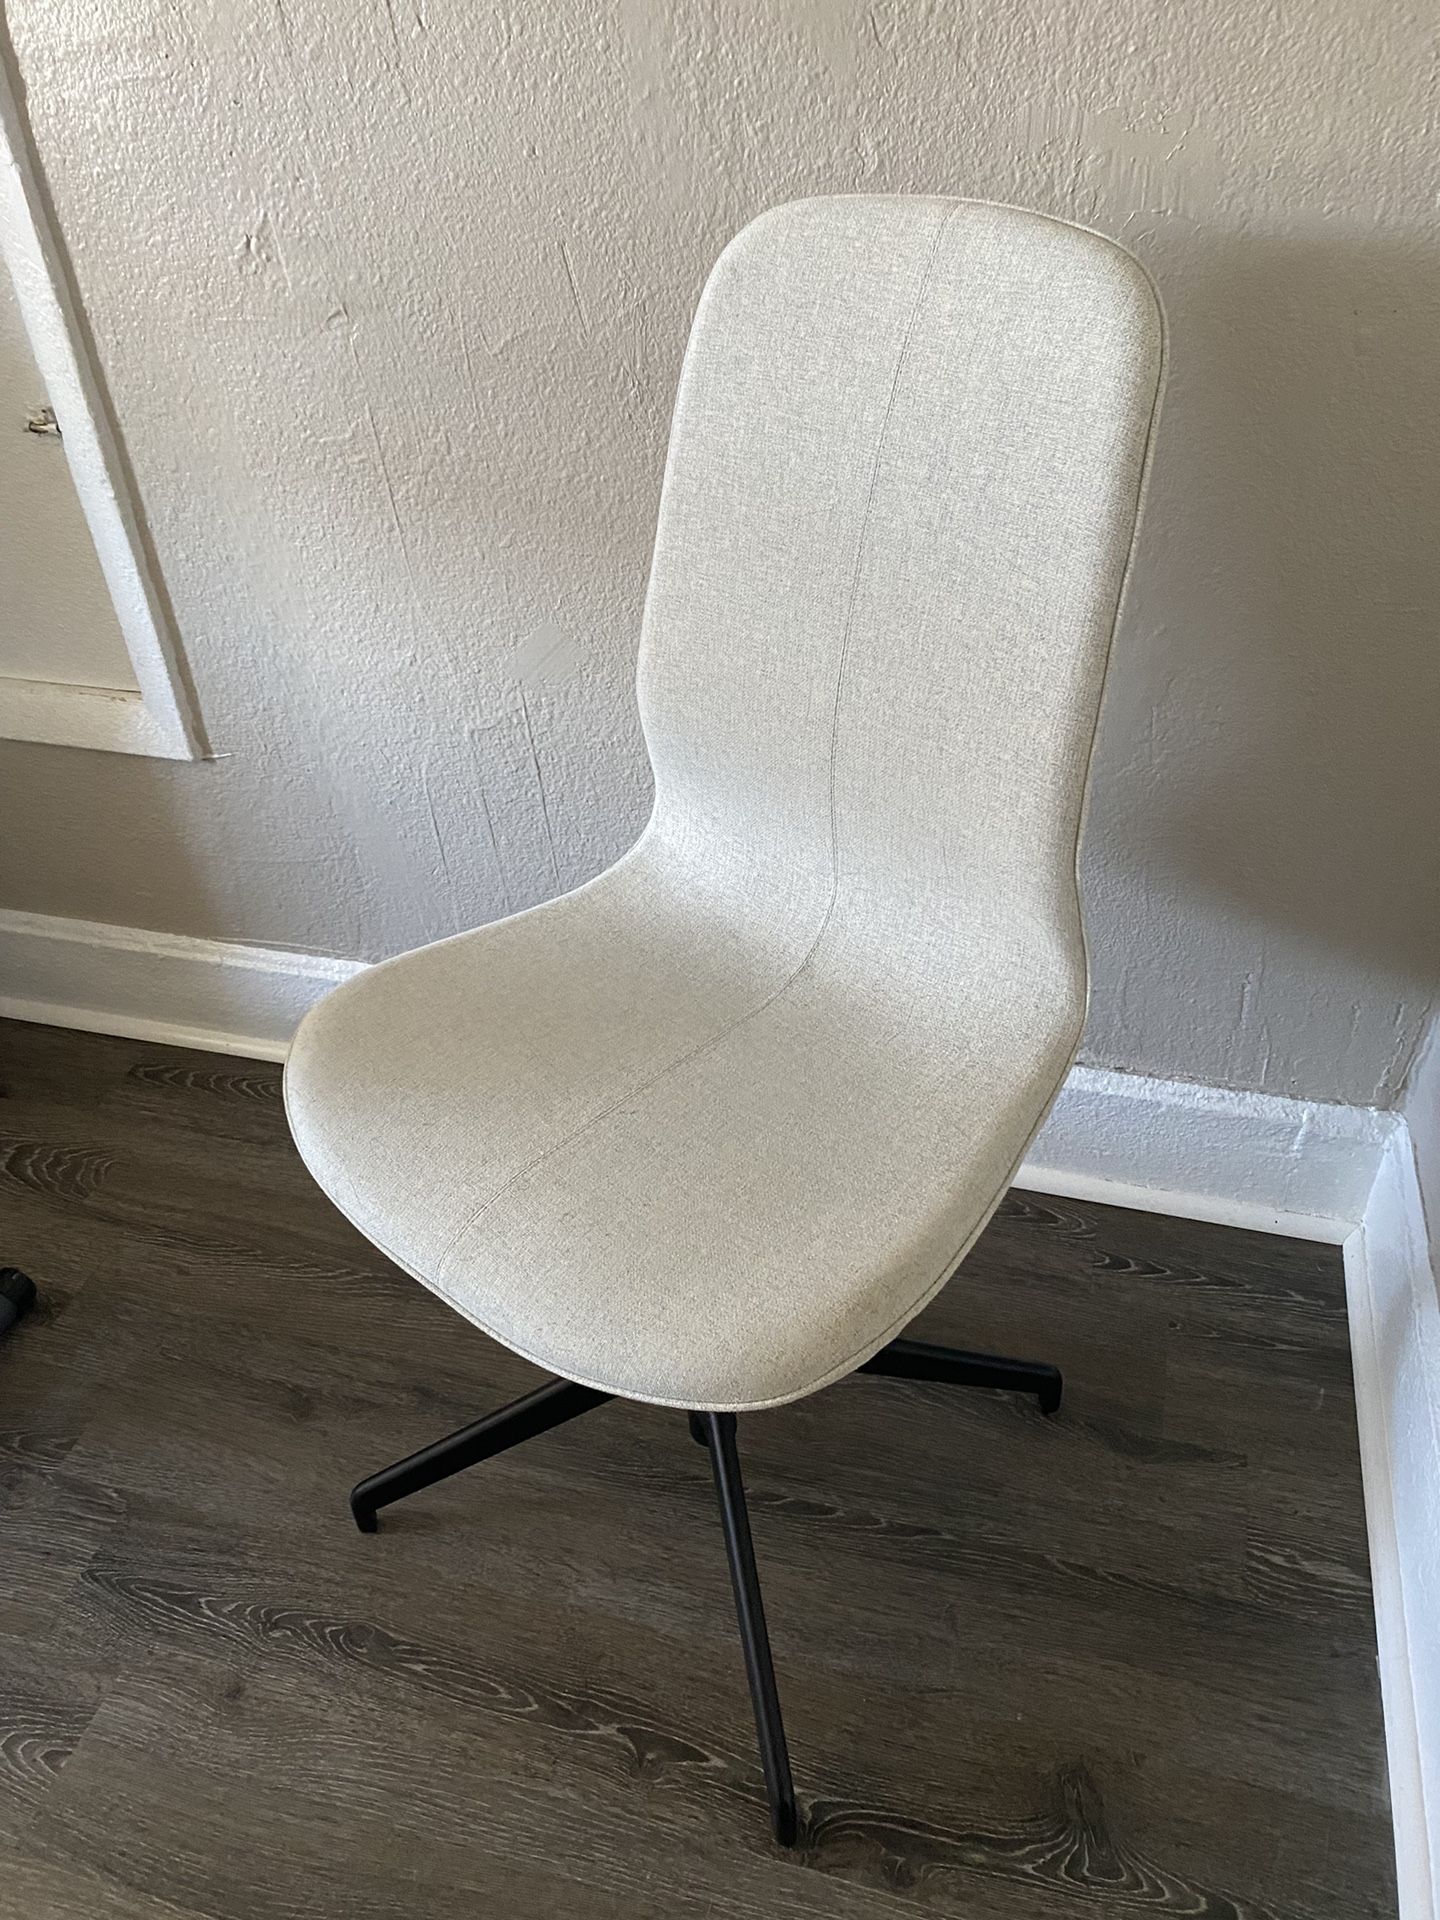 IKEA Langfjall Office Chair